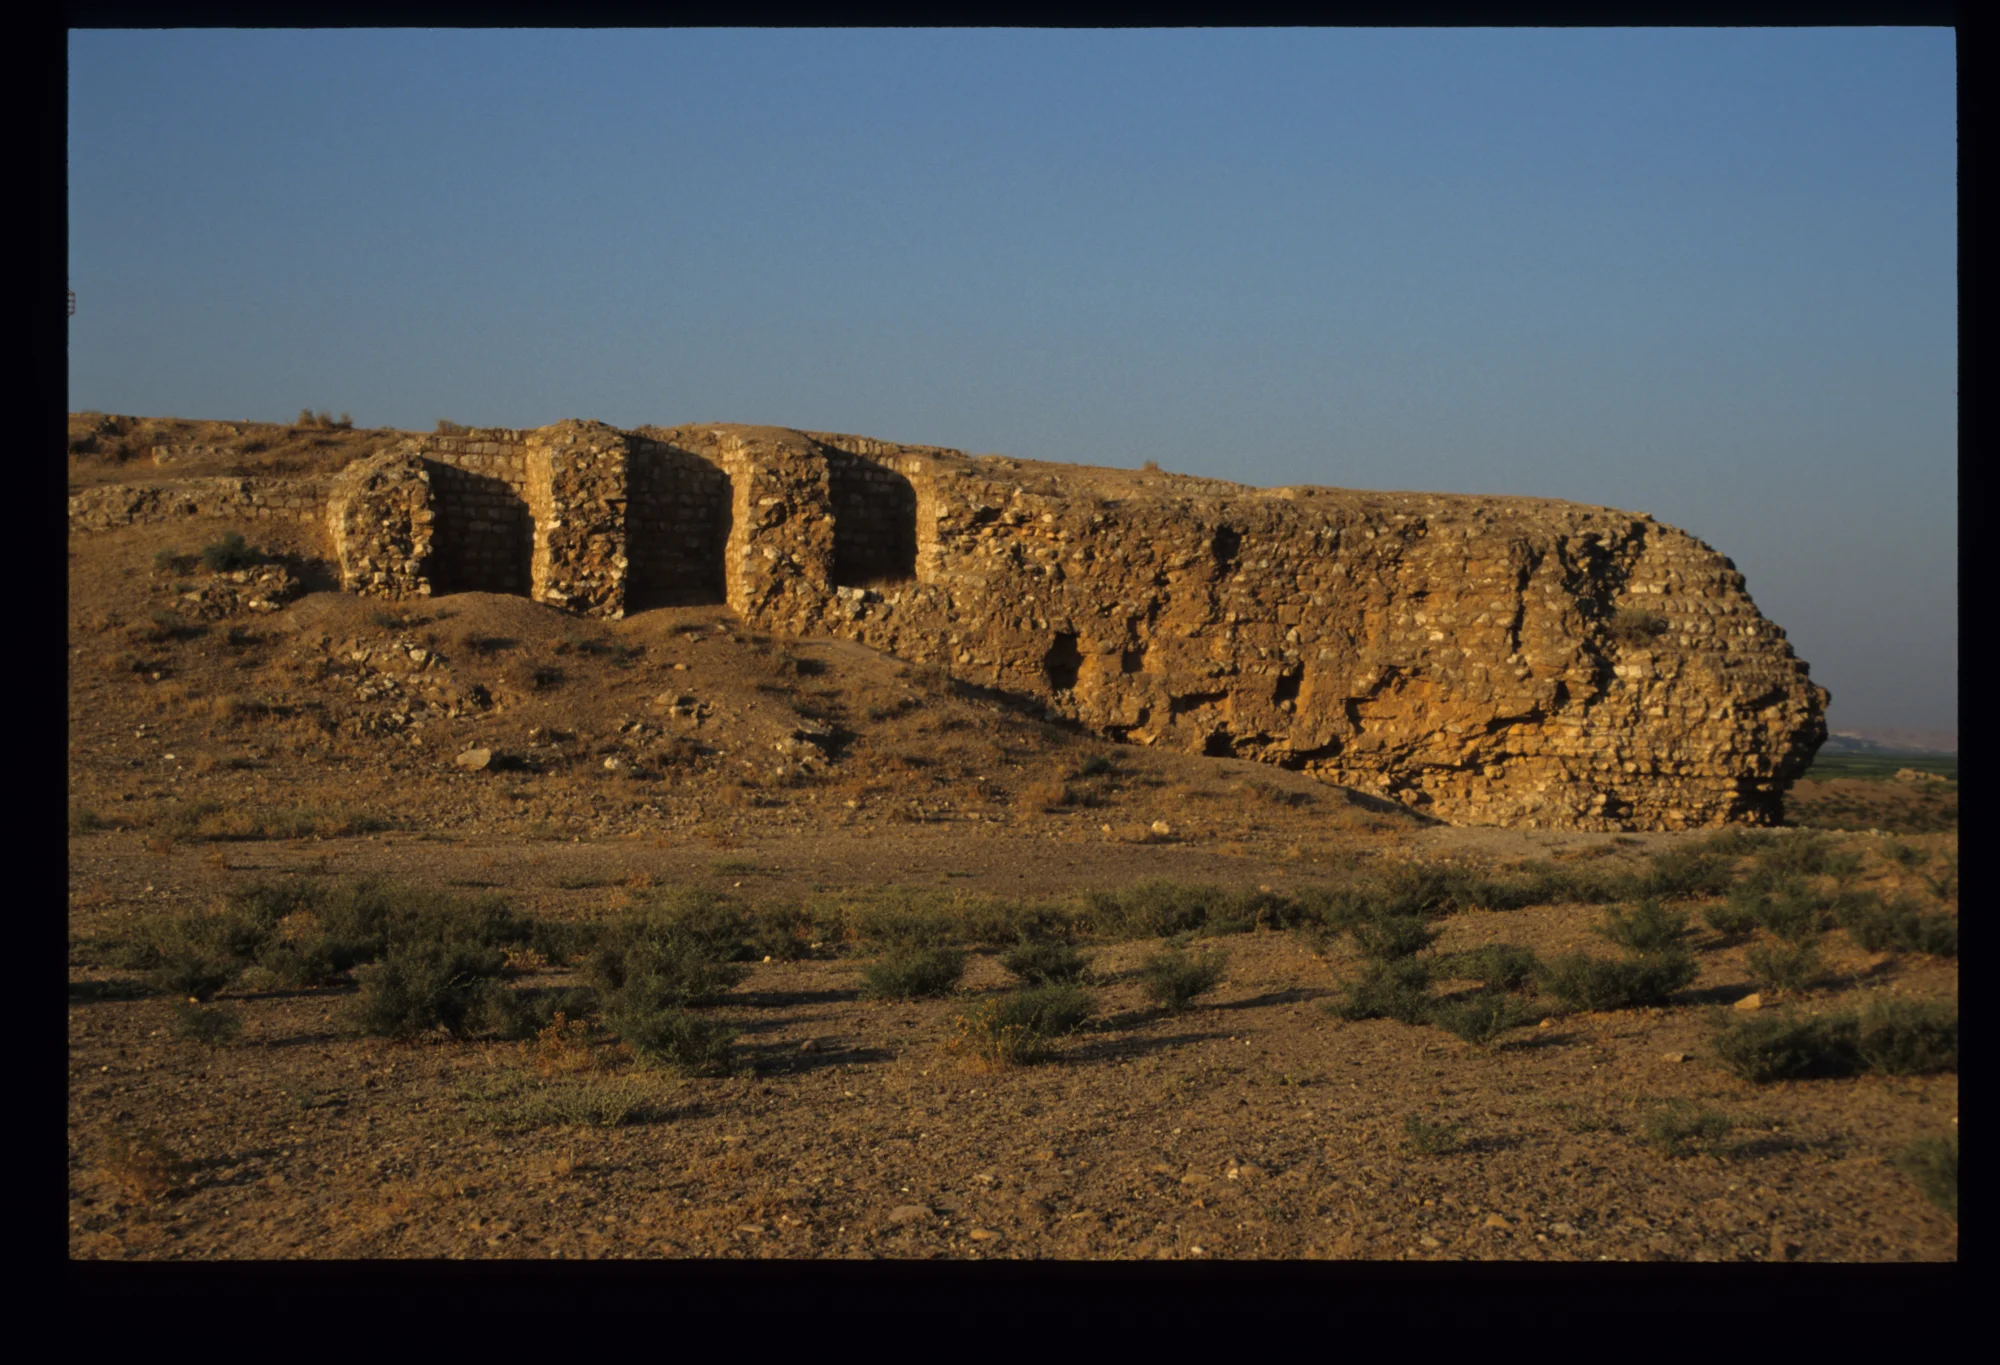 A side of Hiraqla victory monument, built by Harun ar-Rashid, near Raqqa